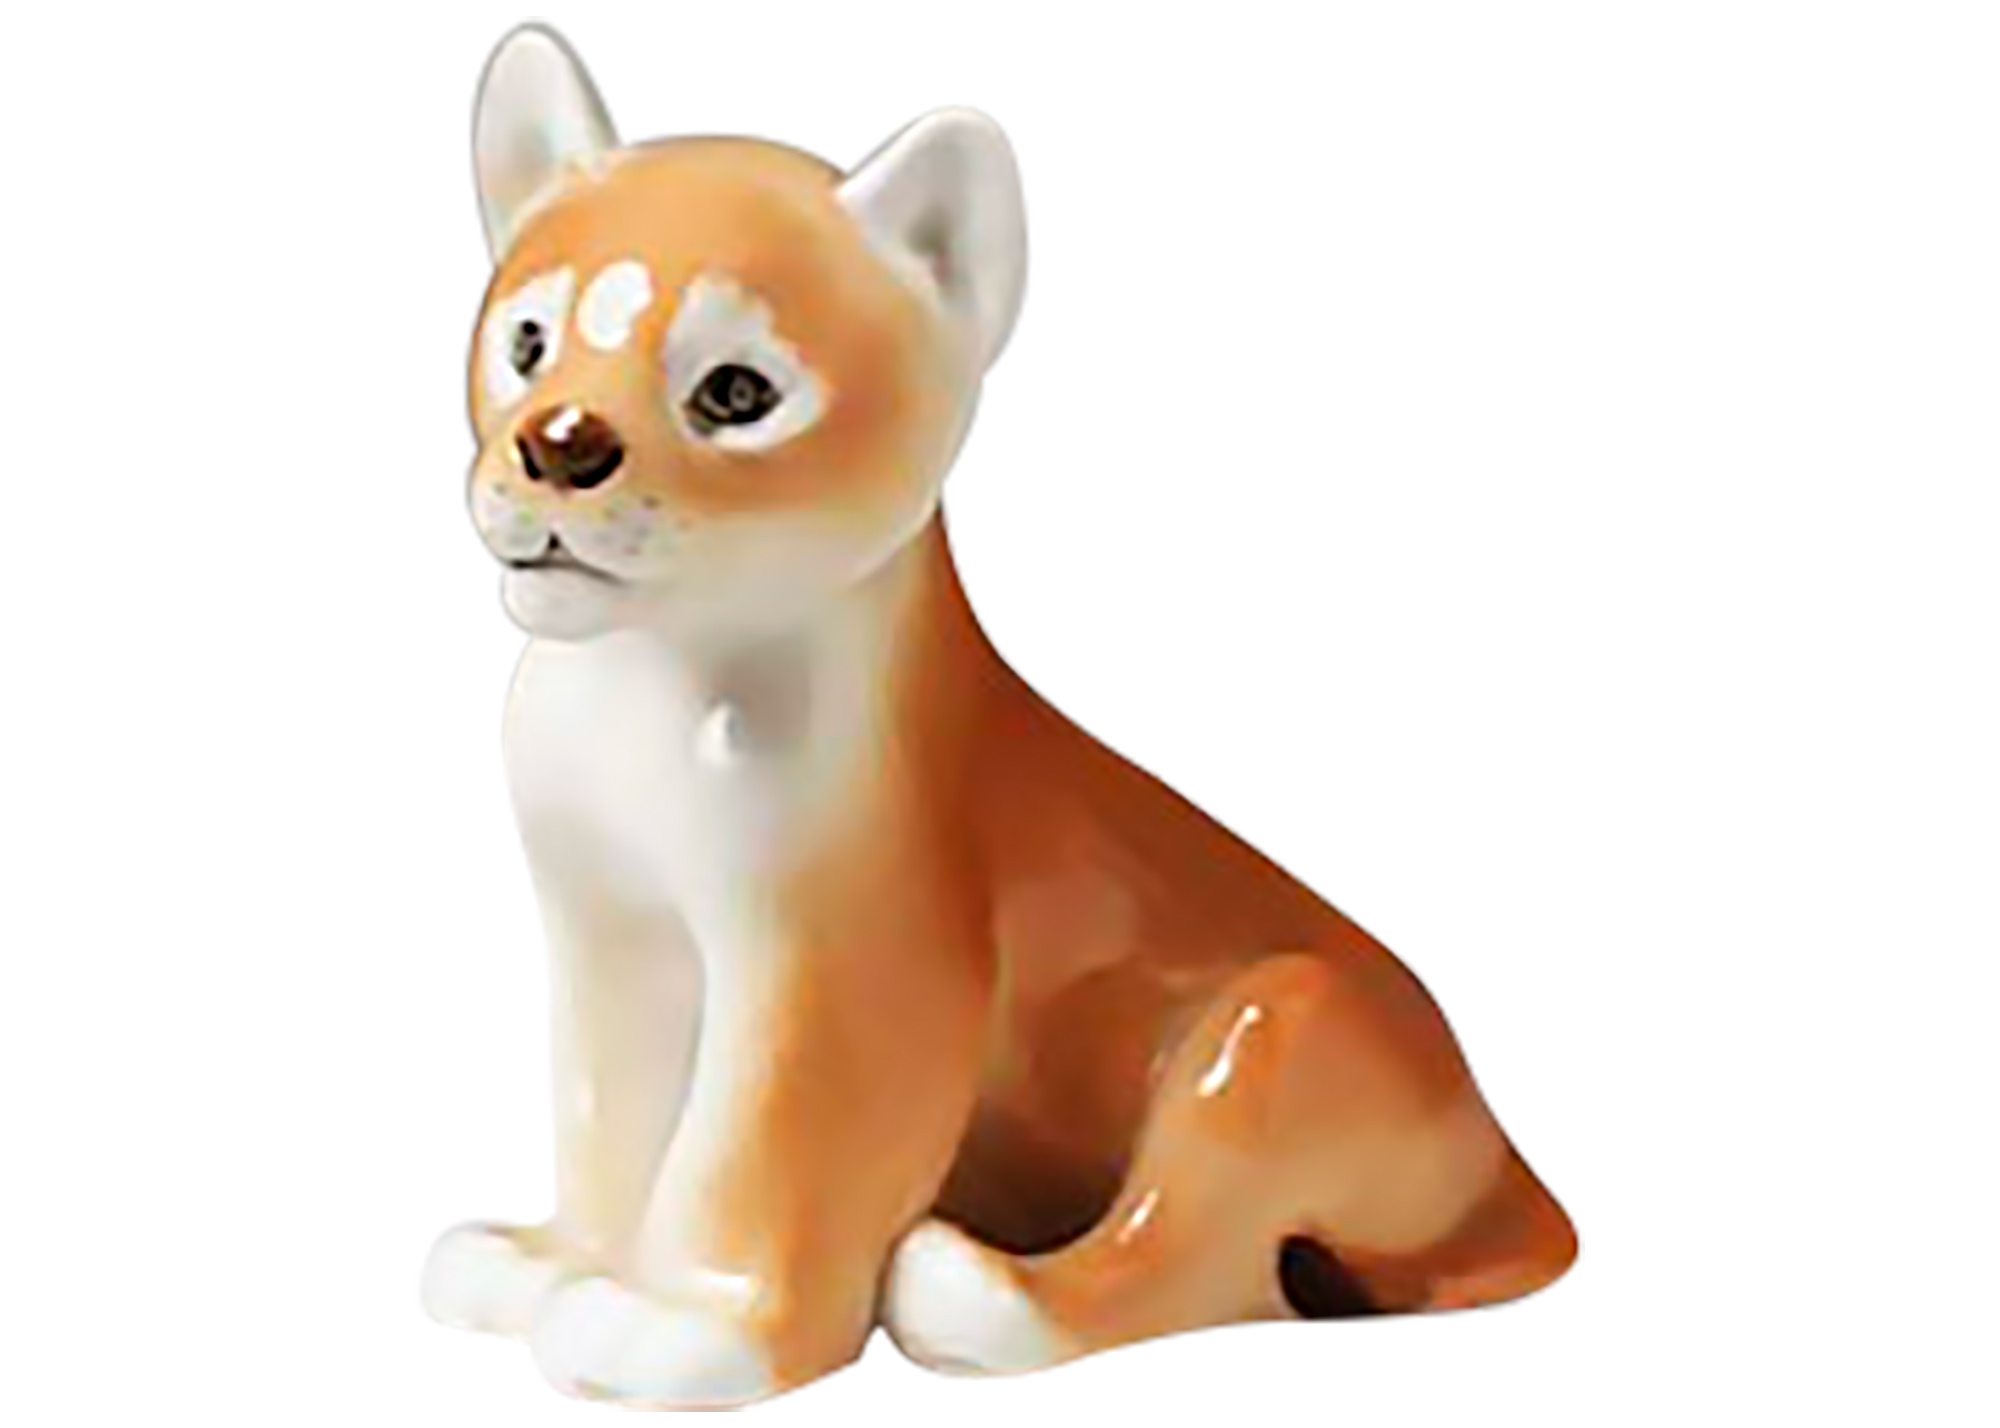 Buy Small Lion Cub Figurine at GoldenCockerel.com